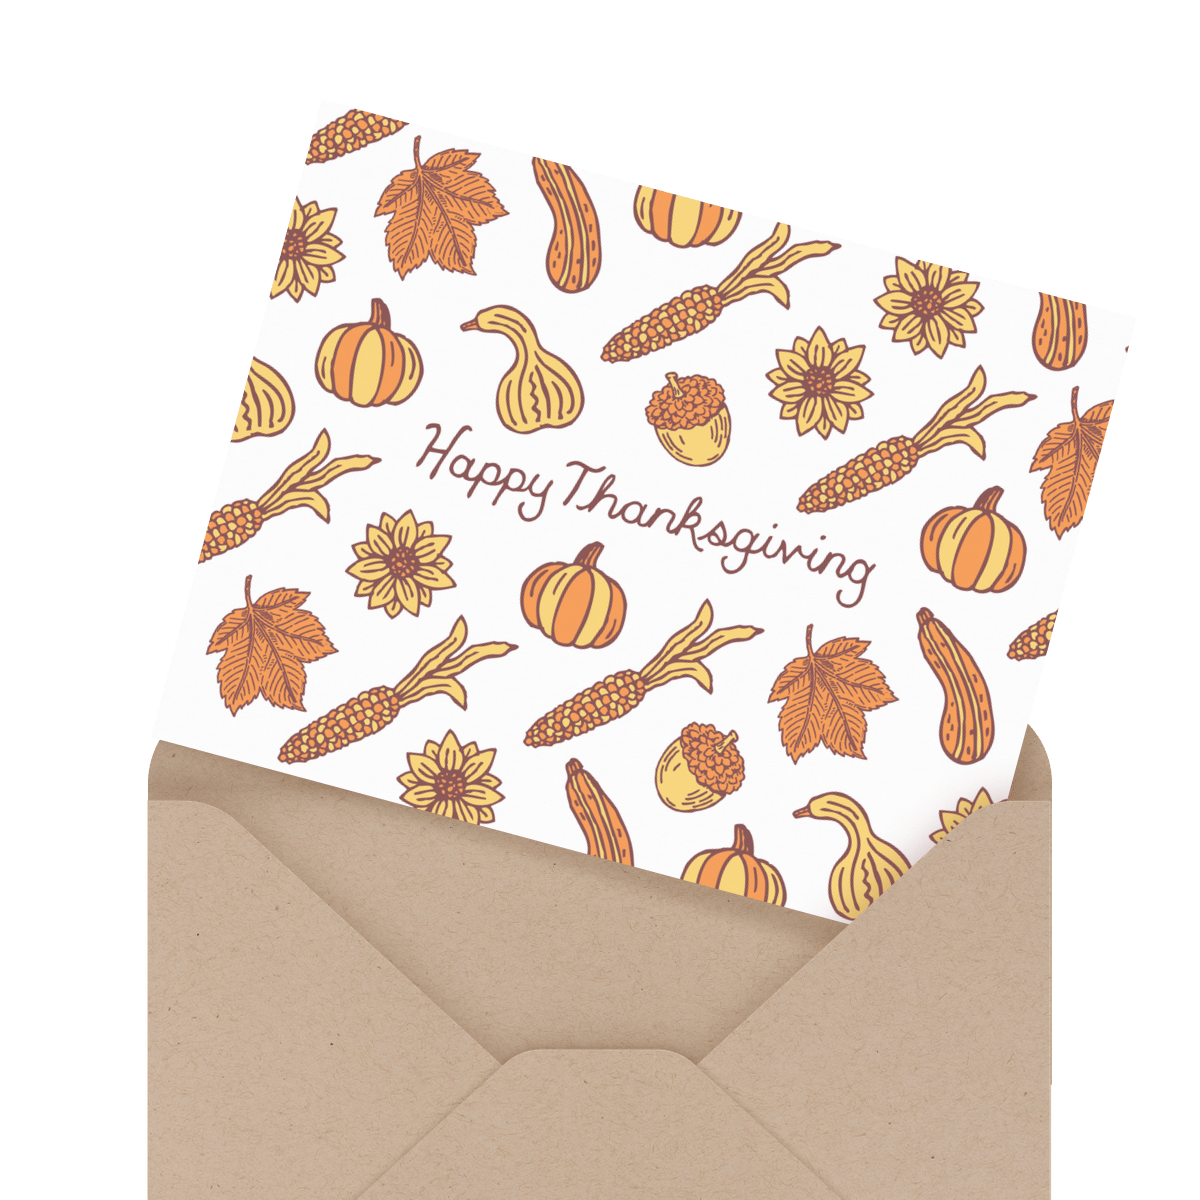 painted turkeys happy thanksgiving card in envelope